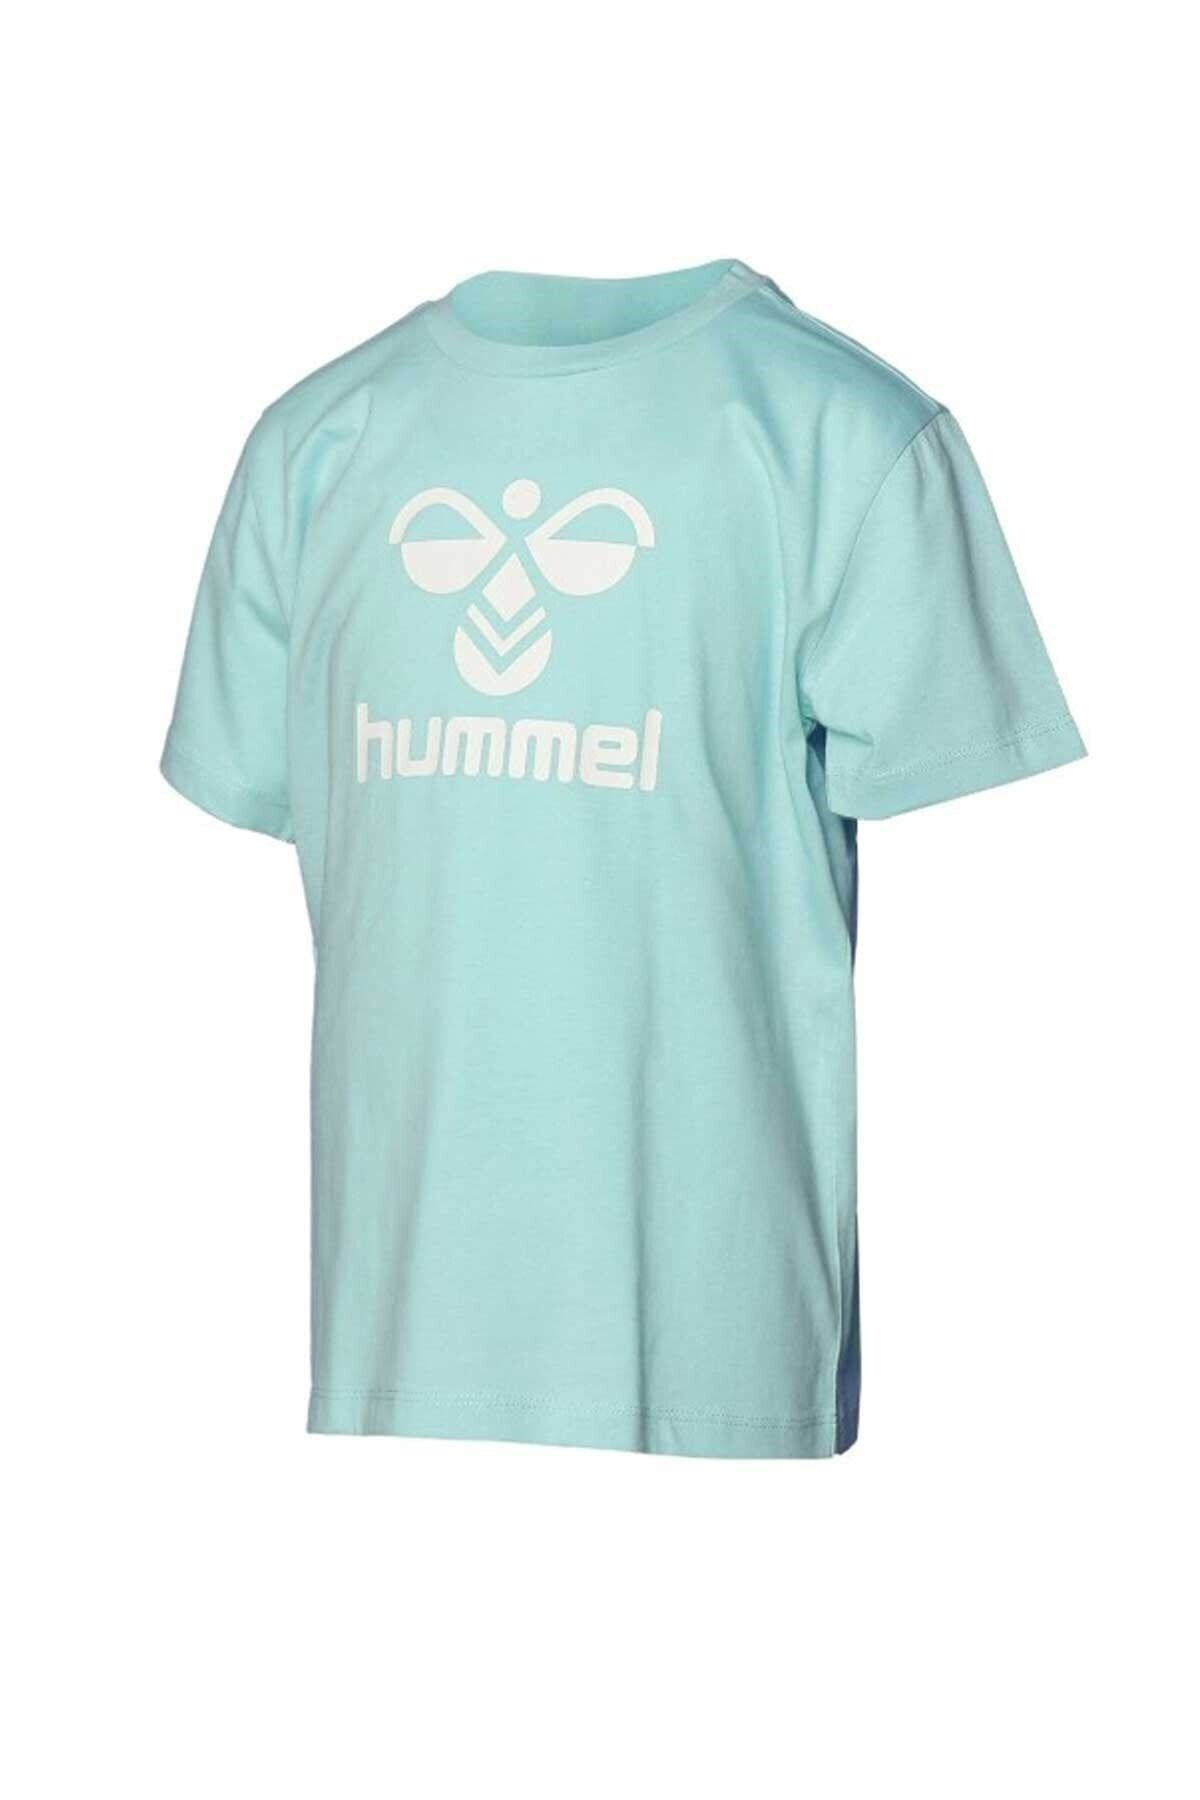 hummel تی شرت کودک لورن 911653-7246